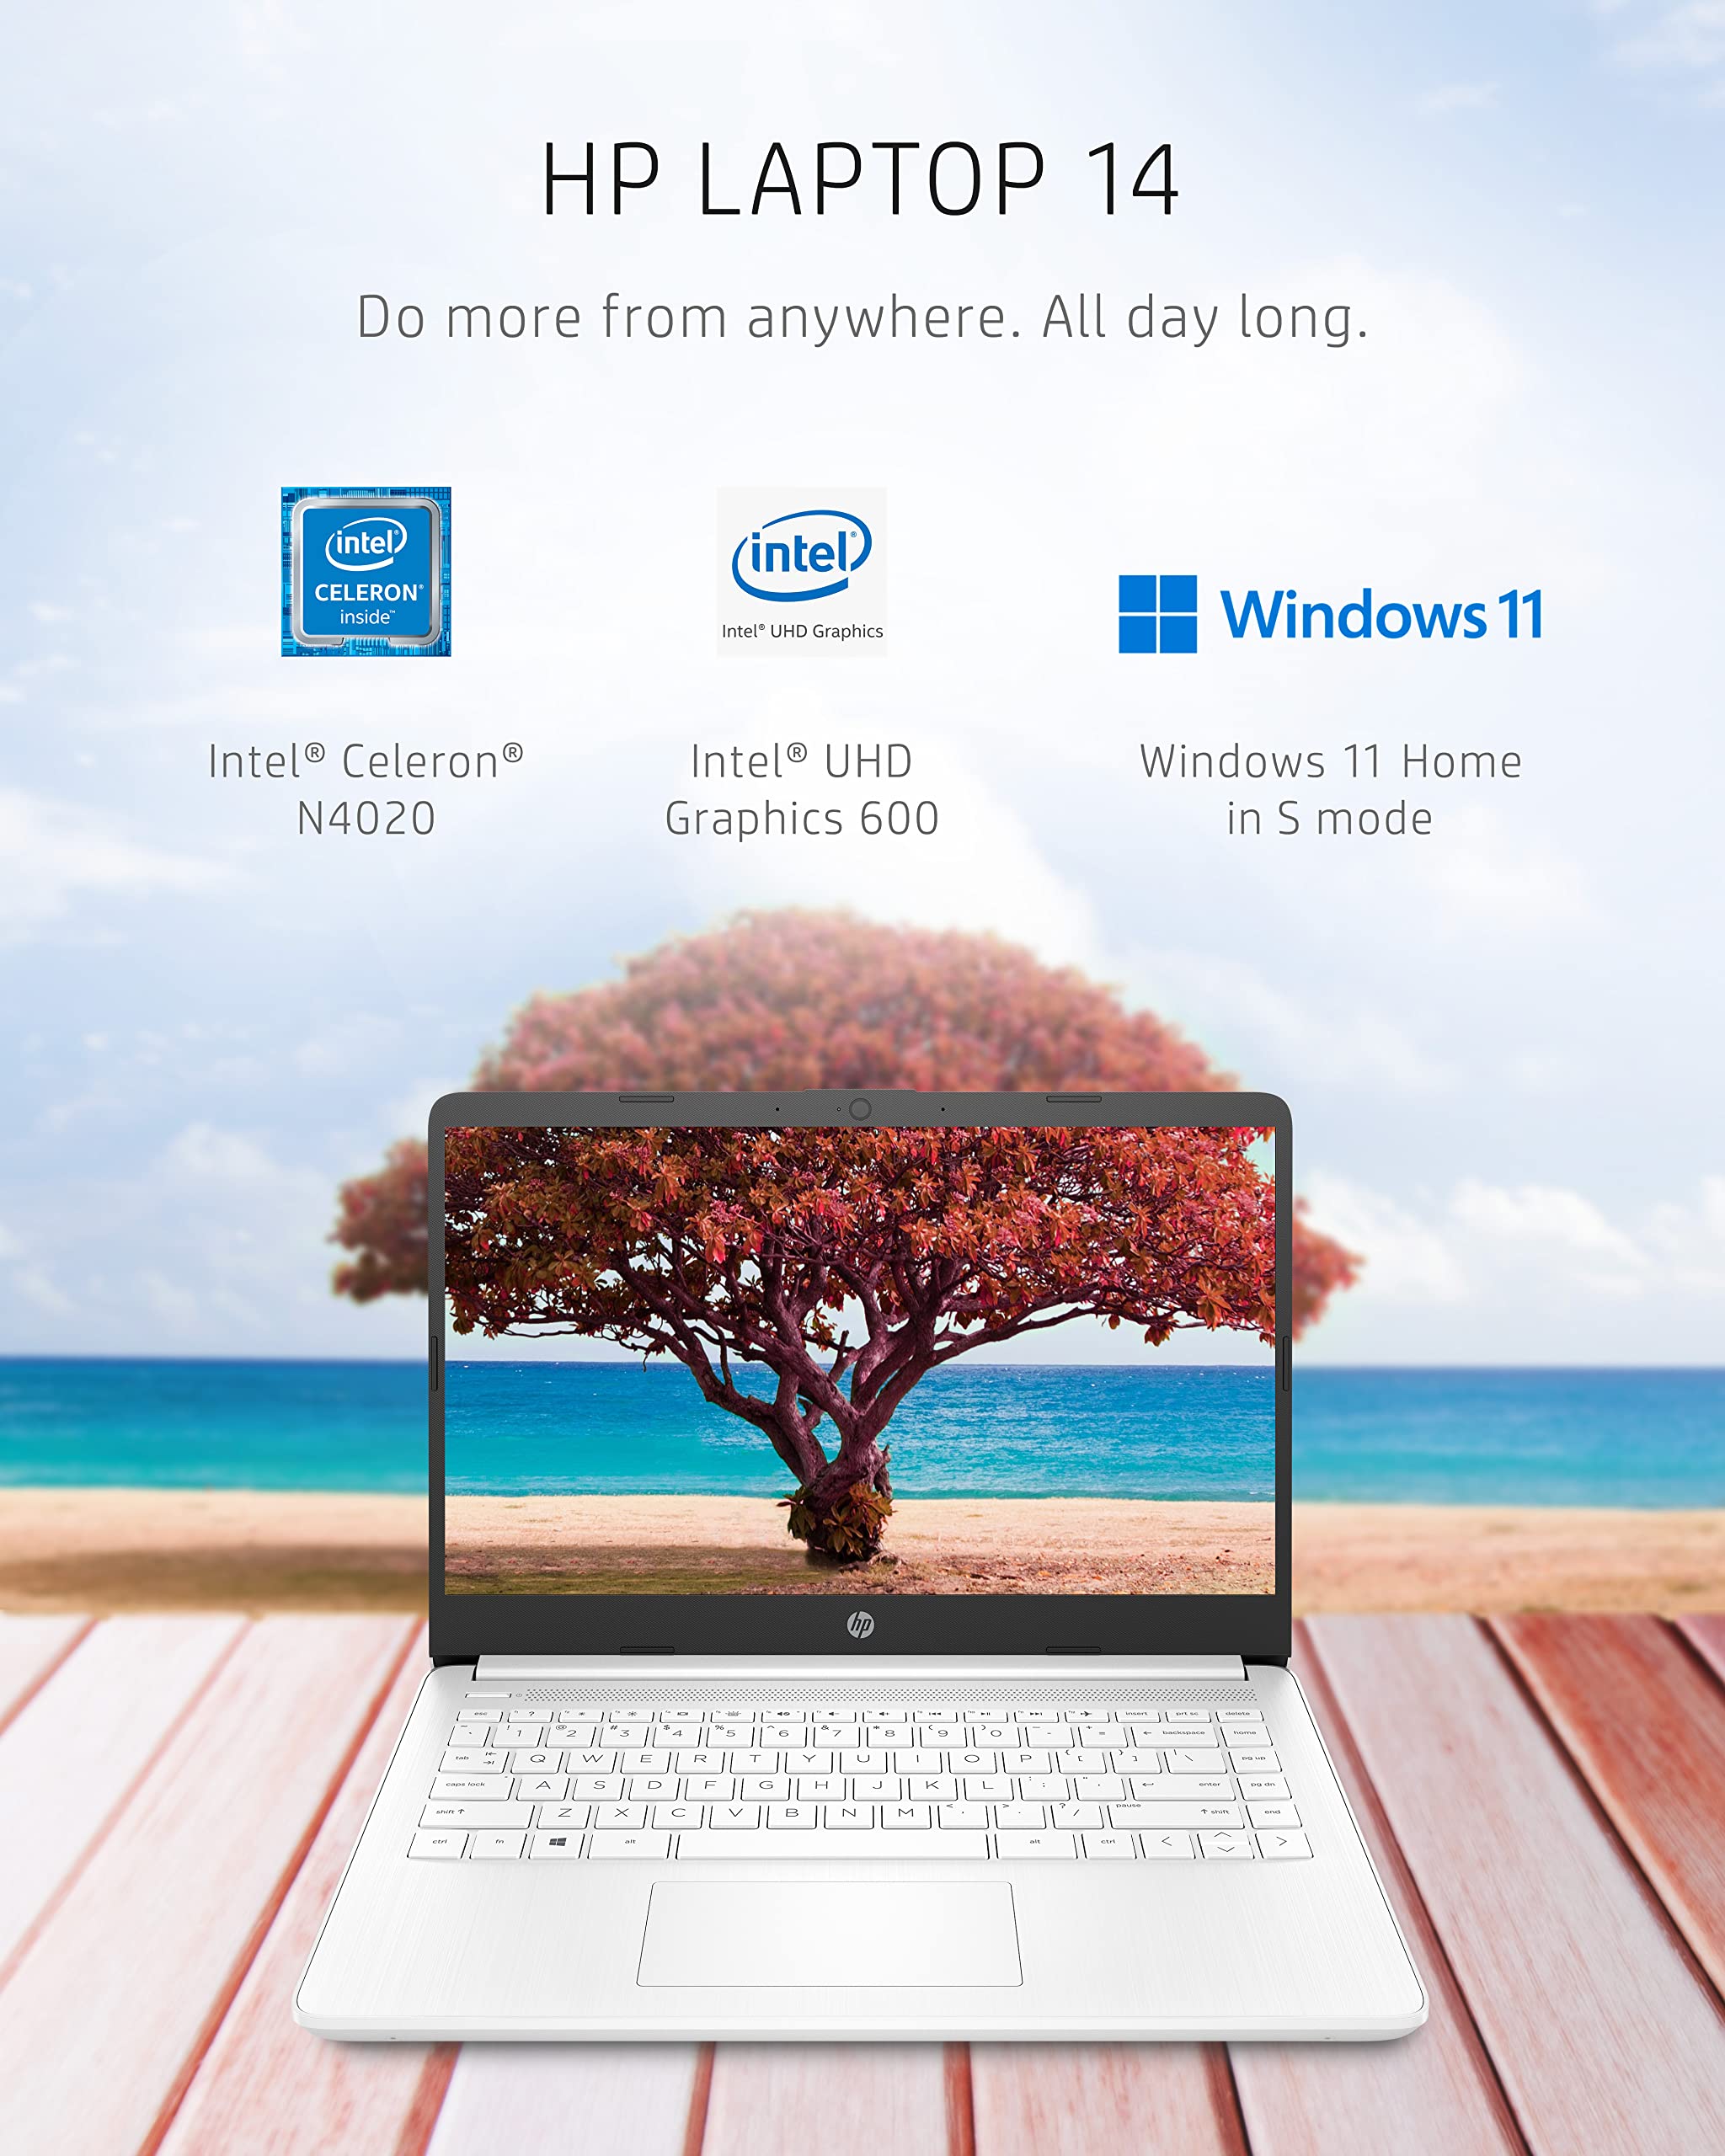 HP 14 Laptop, Intel Celeron N4020, 4 GB RAM, 64 GB Storage, 14-inch HD Touchscreen, Windows 11 Home, Thin & Portable, 4K Graphics, One Year of Microsoft 365 (14-dq0080nr, 2021, Snowflake White)